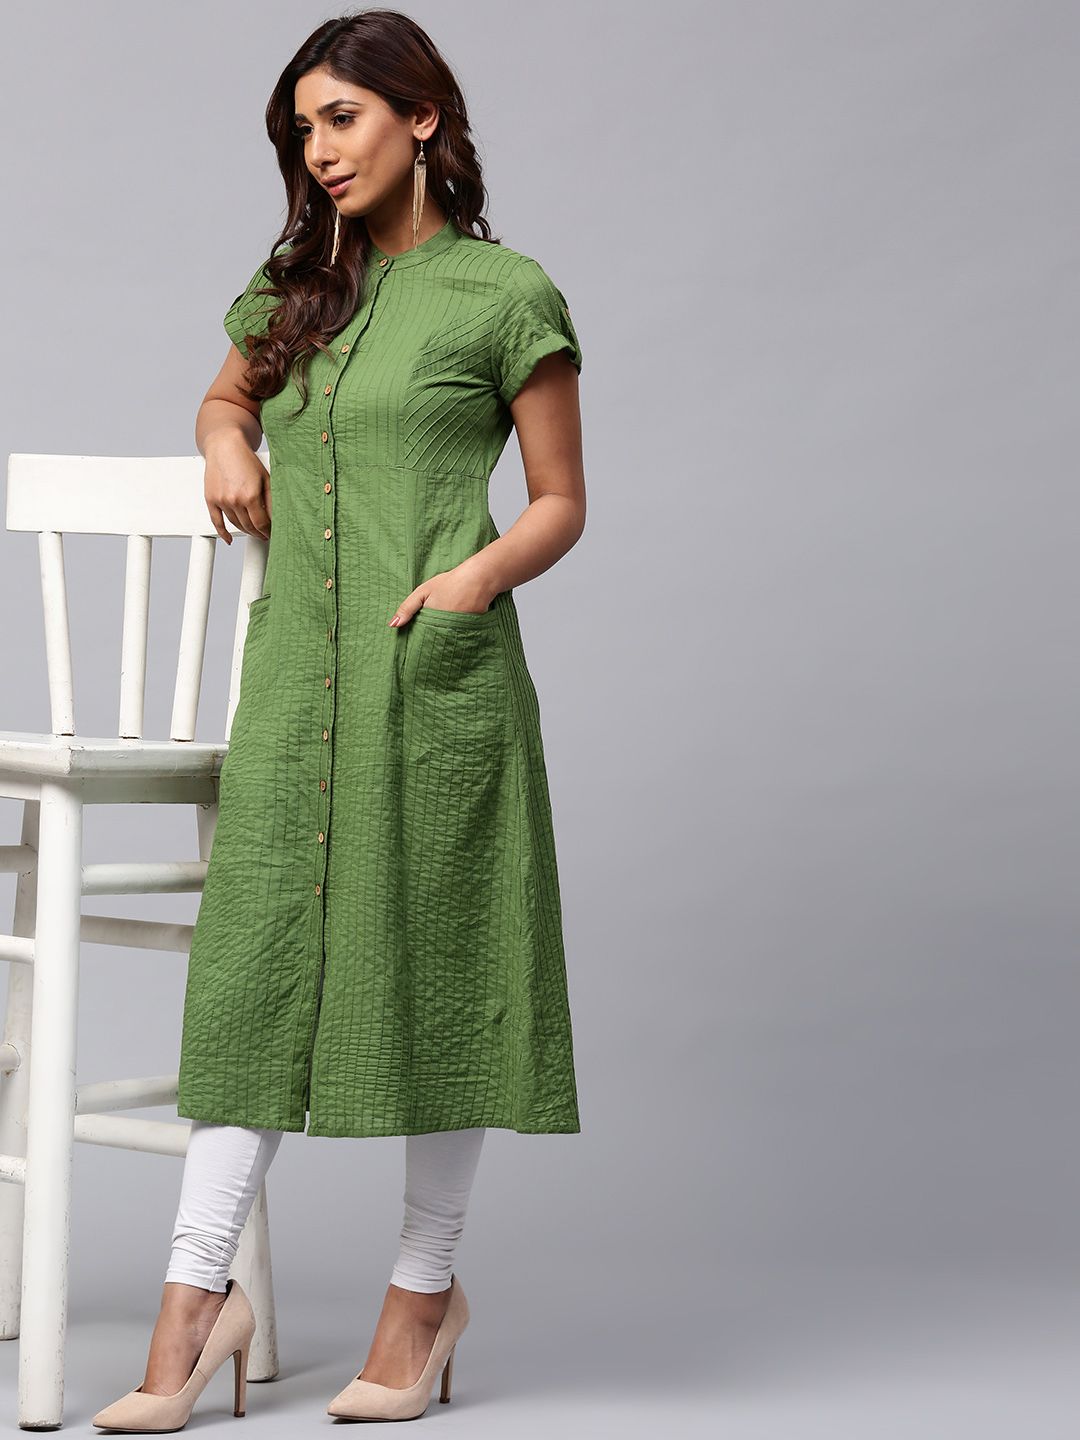 Jaipur Kurti Women Green Self-Striped A-Line Kurta Price in India